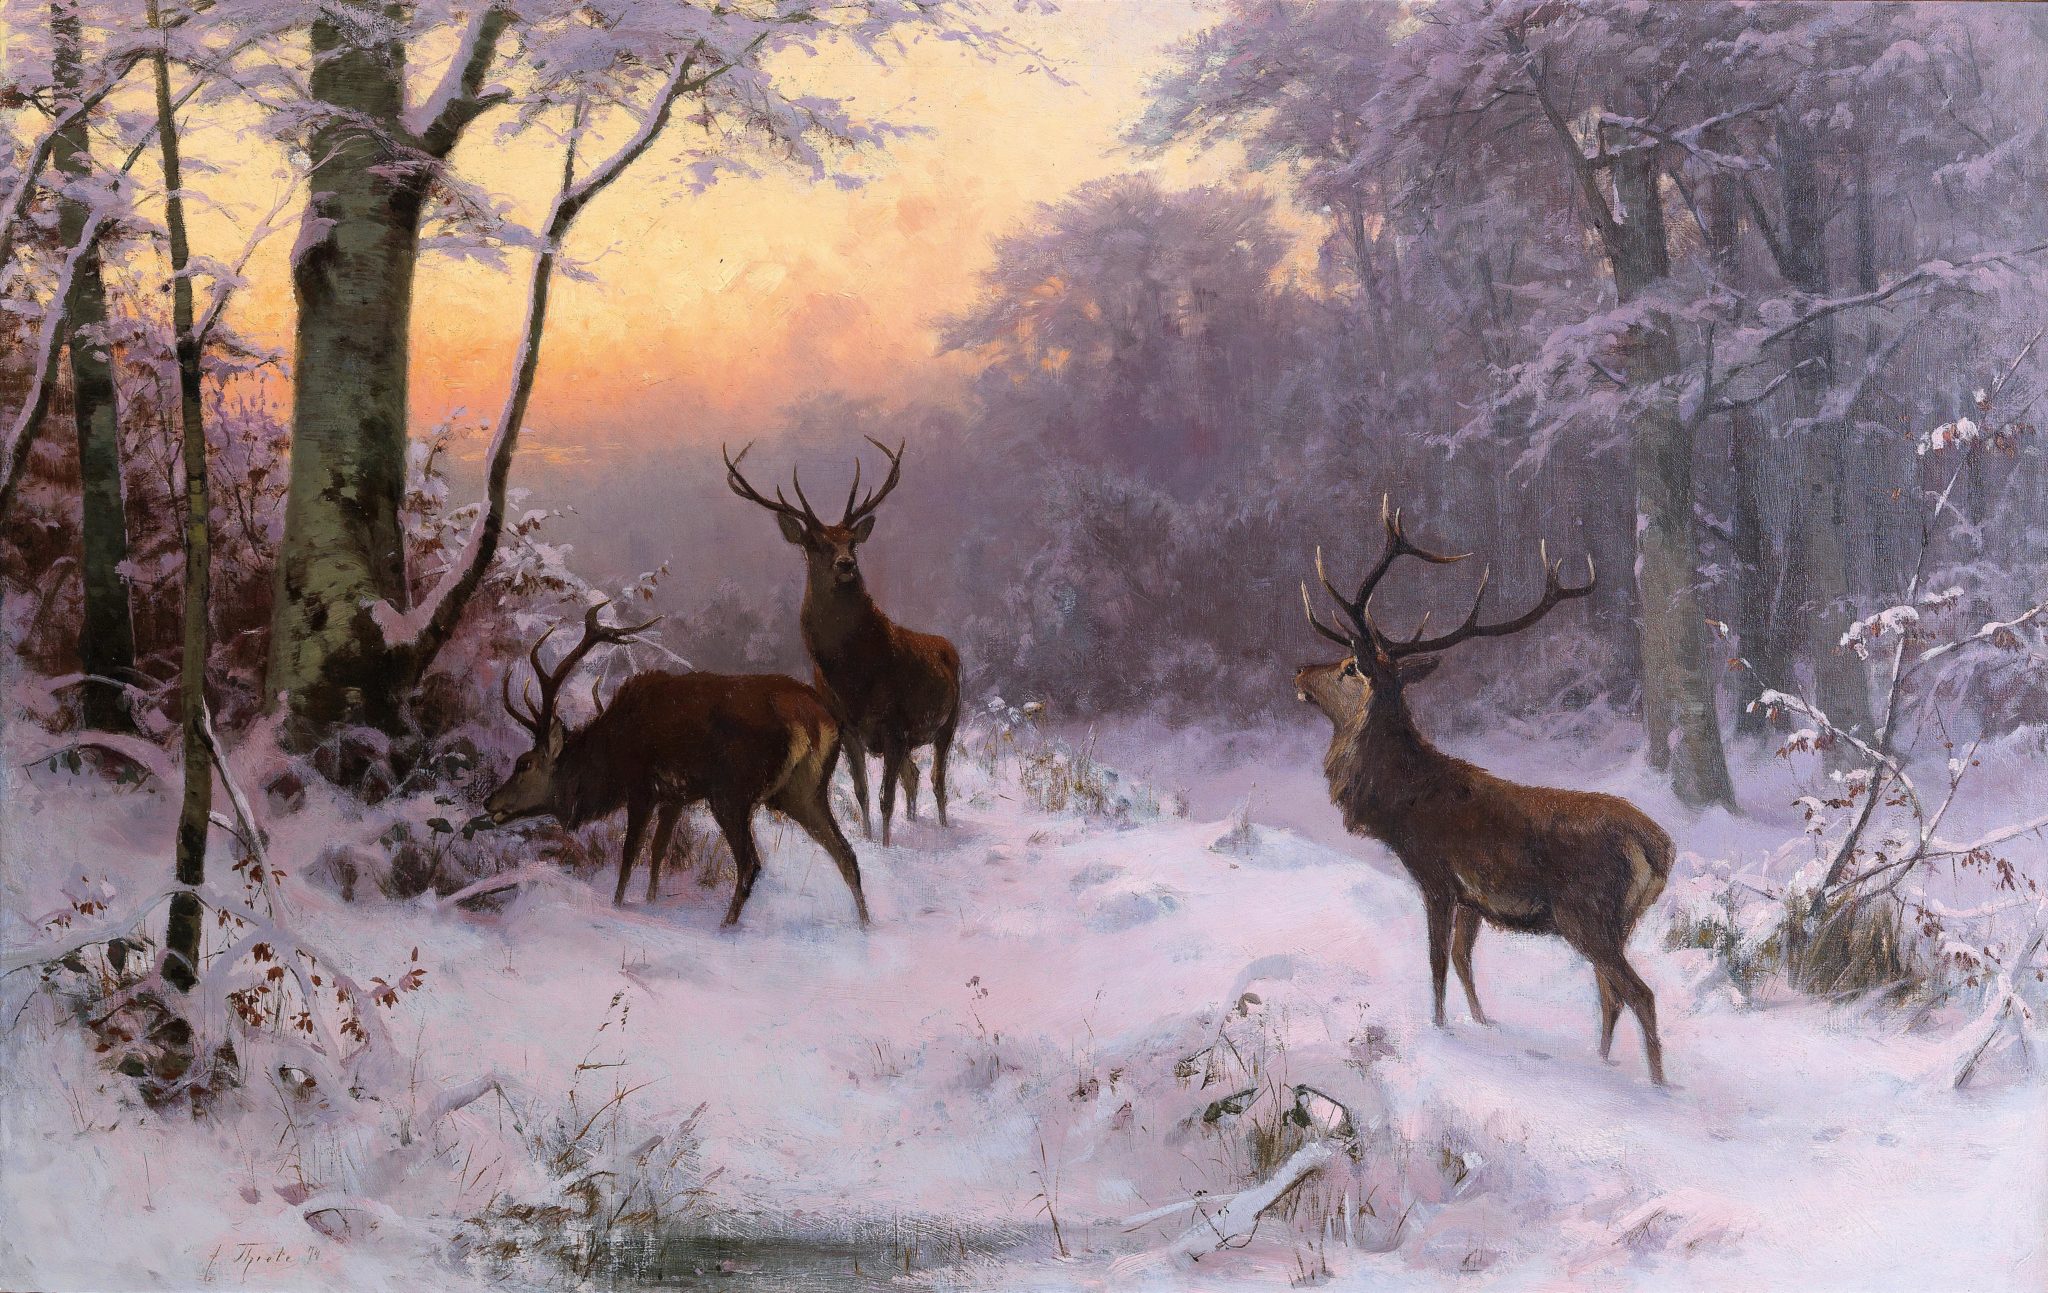 Deer in a Winter Woodland, by Arthur Thiele